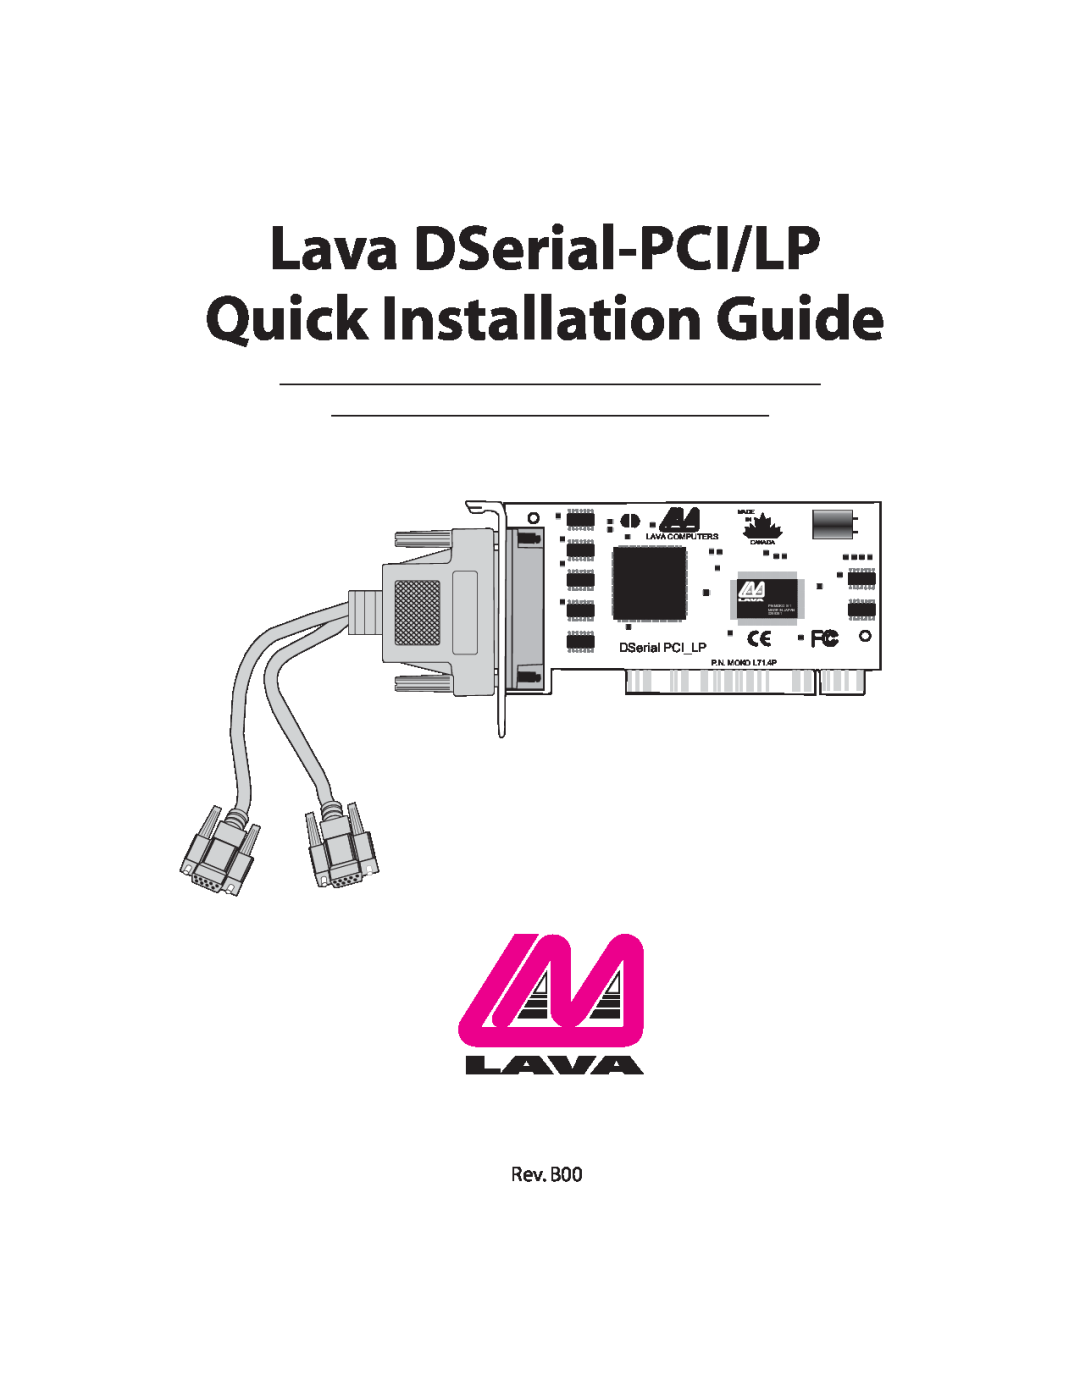 Lava Computer DSerial-PCI/LP Card manual Lava DSerial-PCI/LP Quick Installation Guide, DSerial PCILP, Lava Computers 